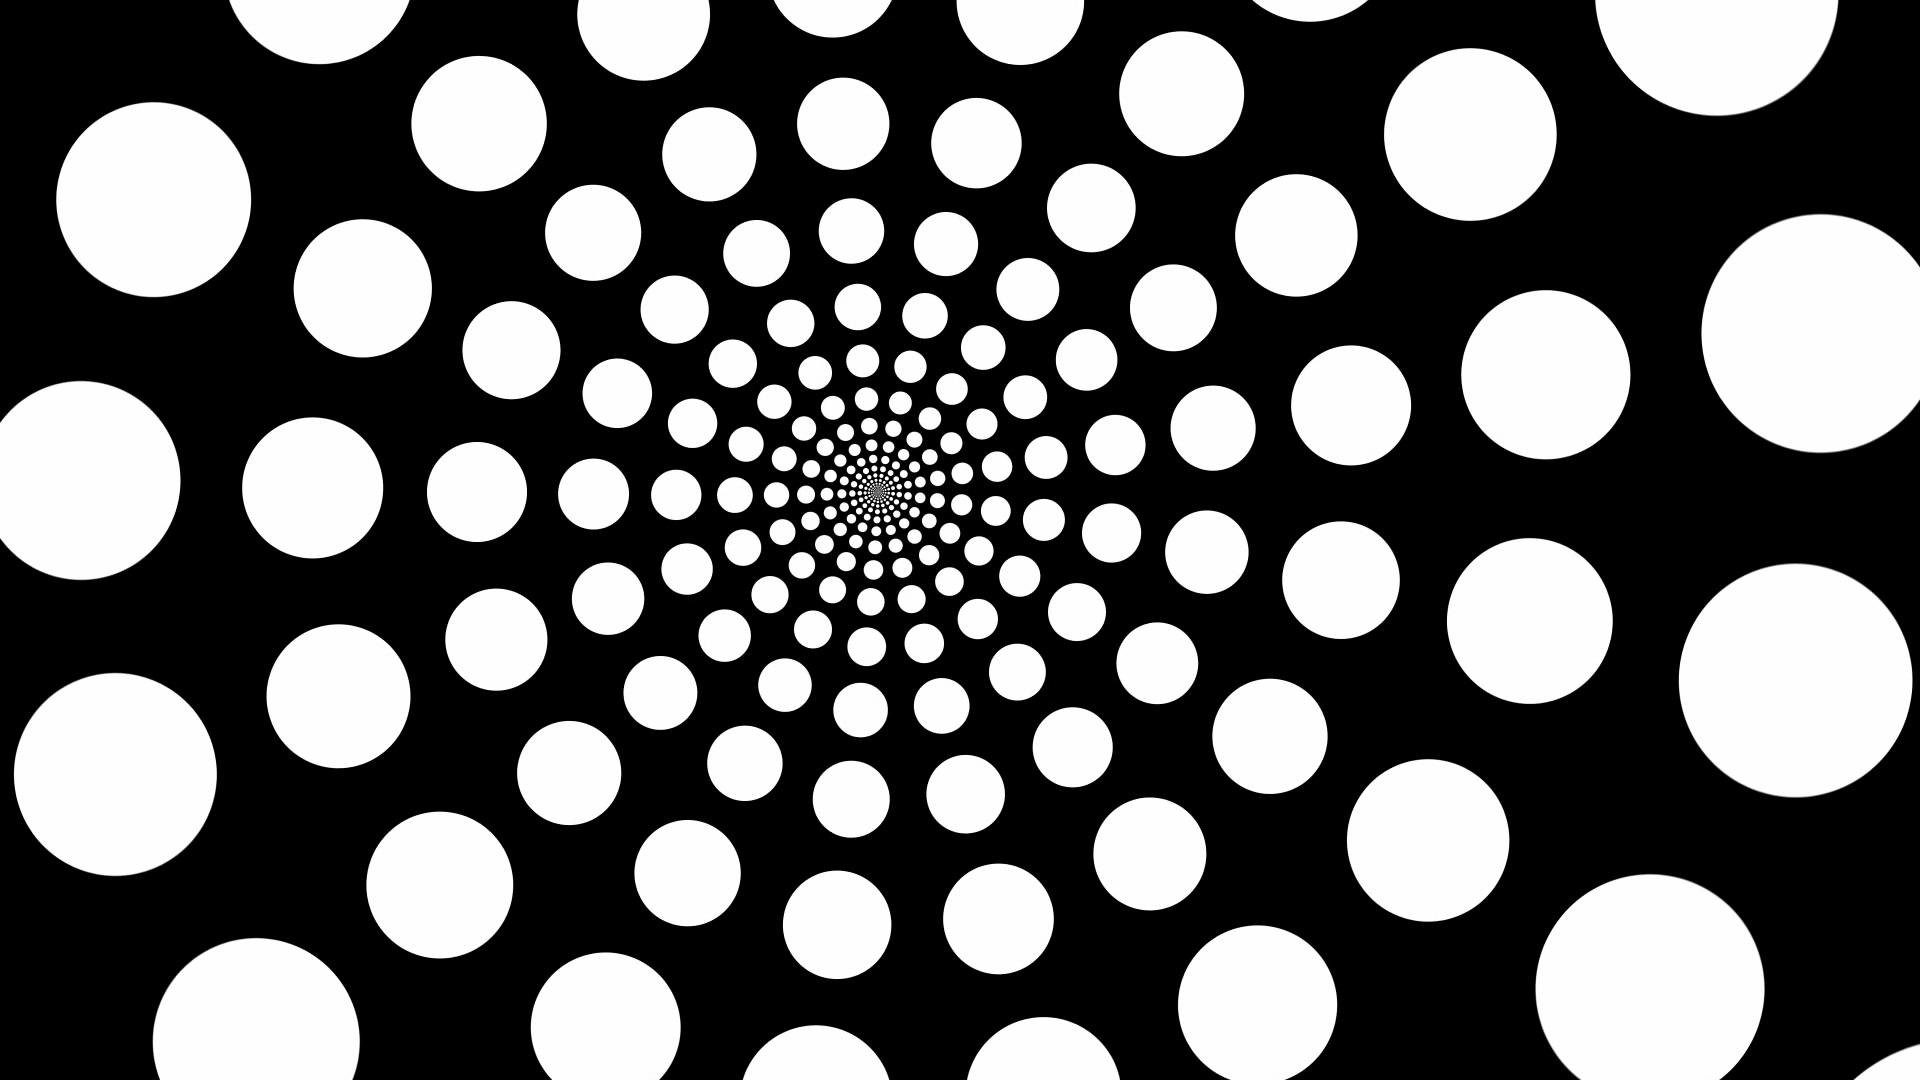 1920x1080 Tricks on the eye - Spiral meltdown illusion